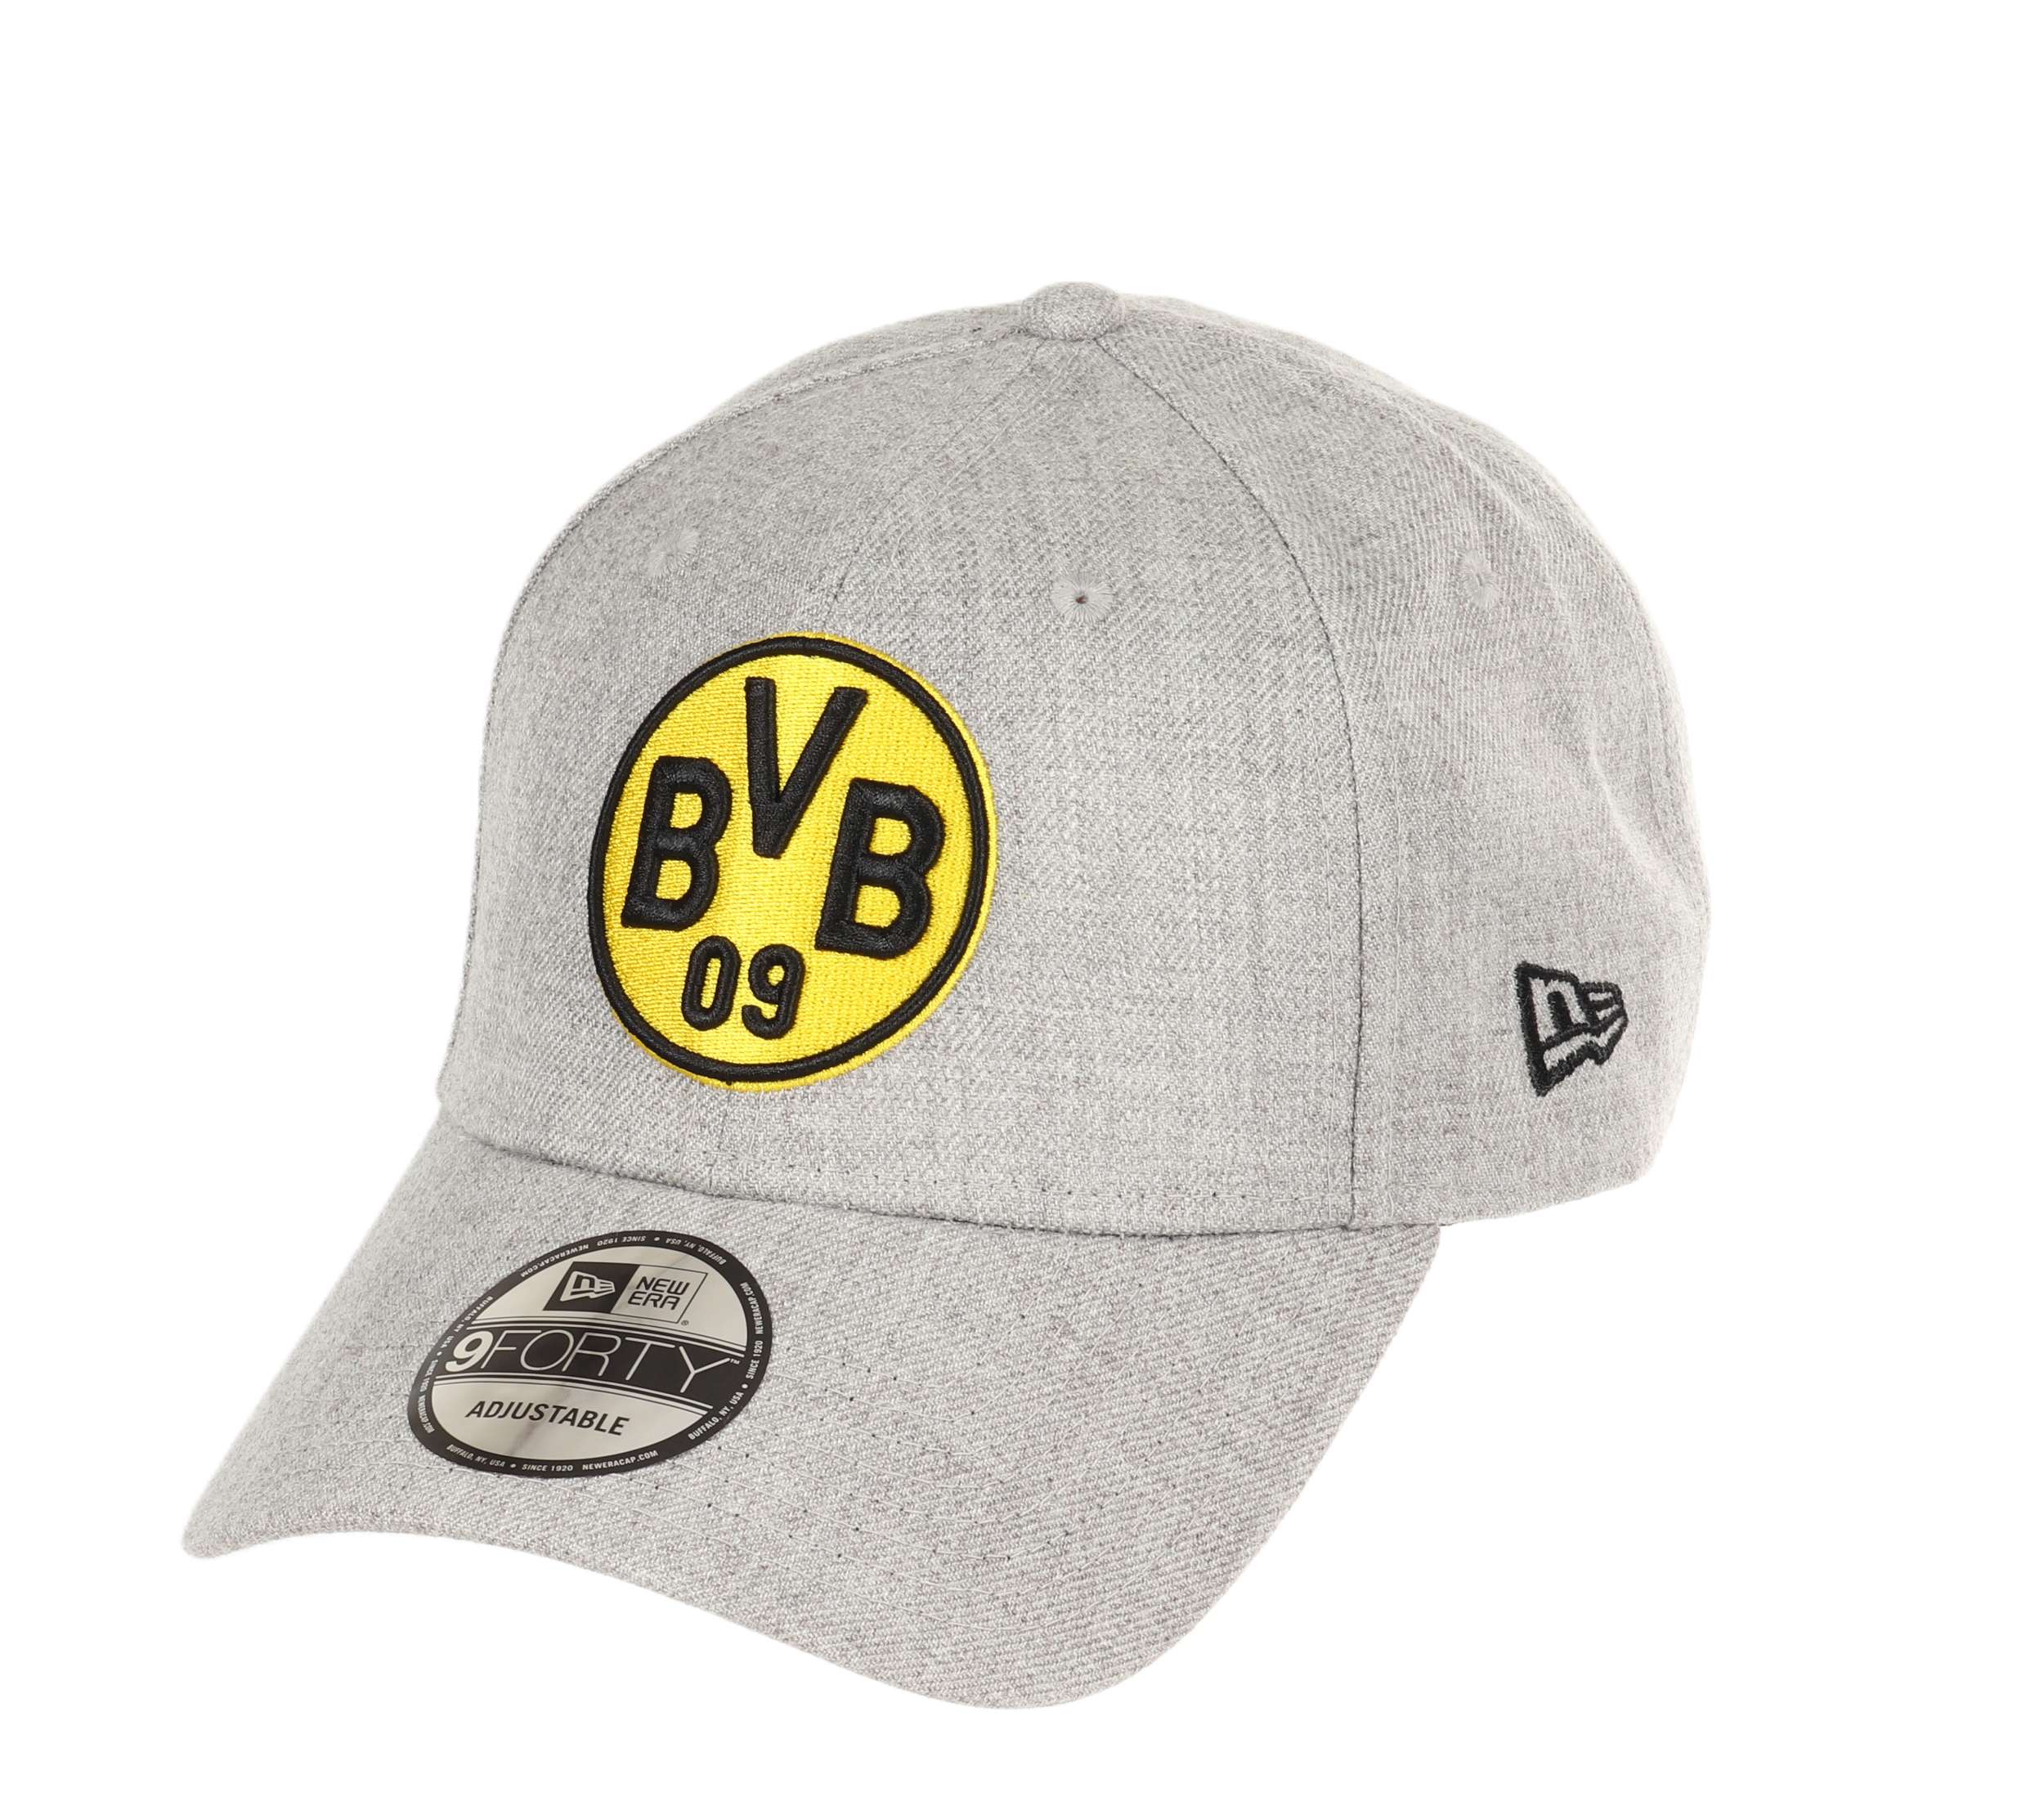 BVB 09 Borussia Dortmund Grau Verstellbare 9Forty Cap New Era